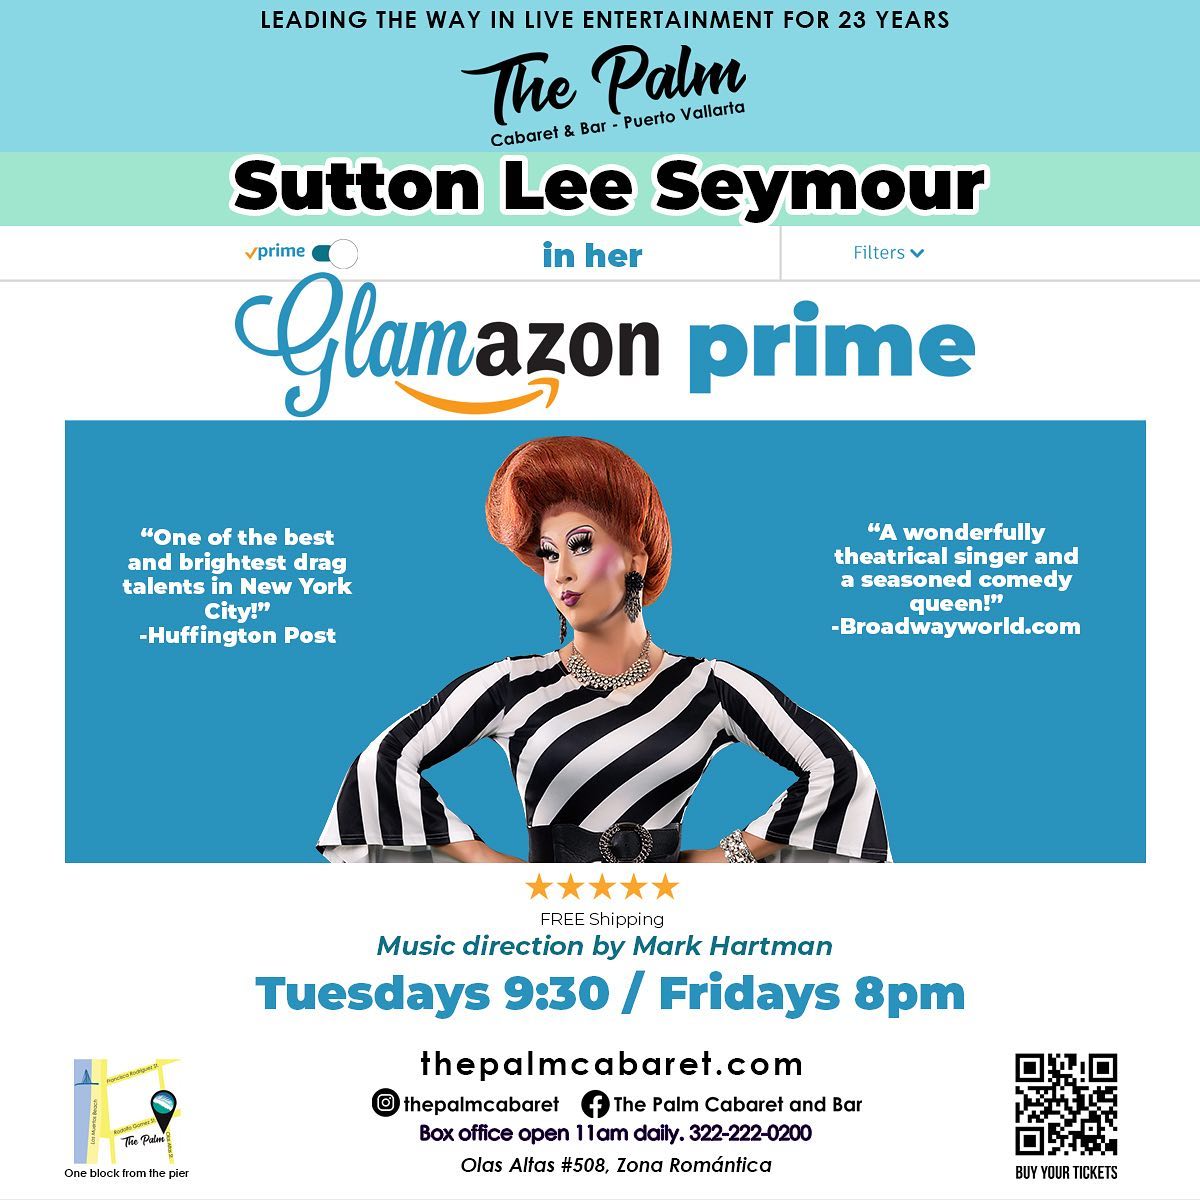 Glamazon Prime - Sutton Lee Seymour